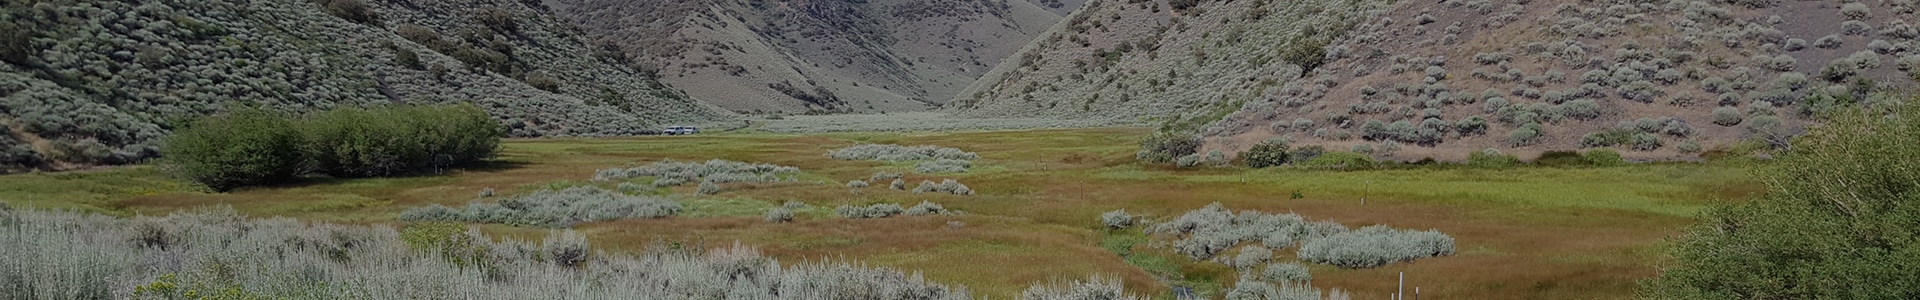 Map of Riparian Vegetation in Nevada